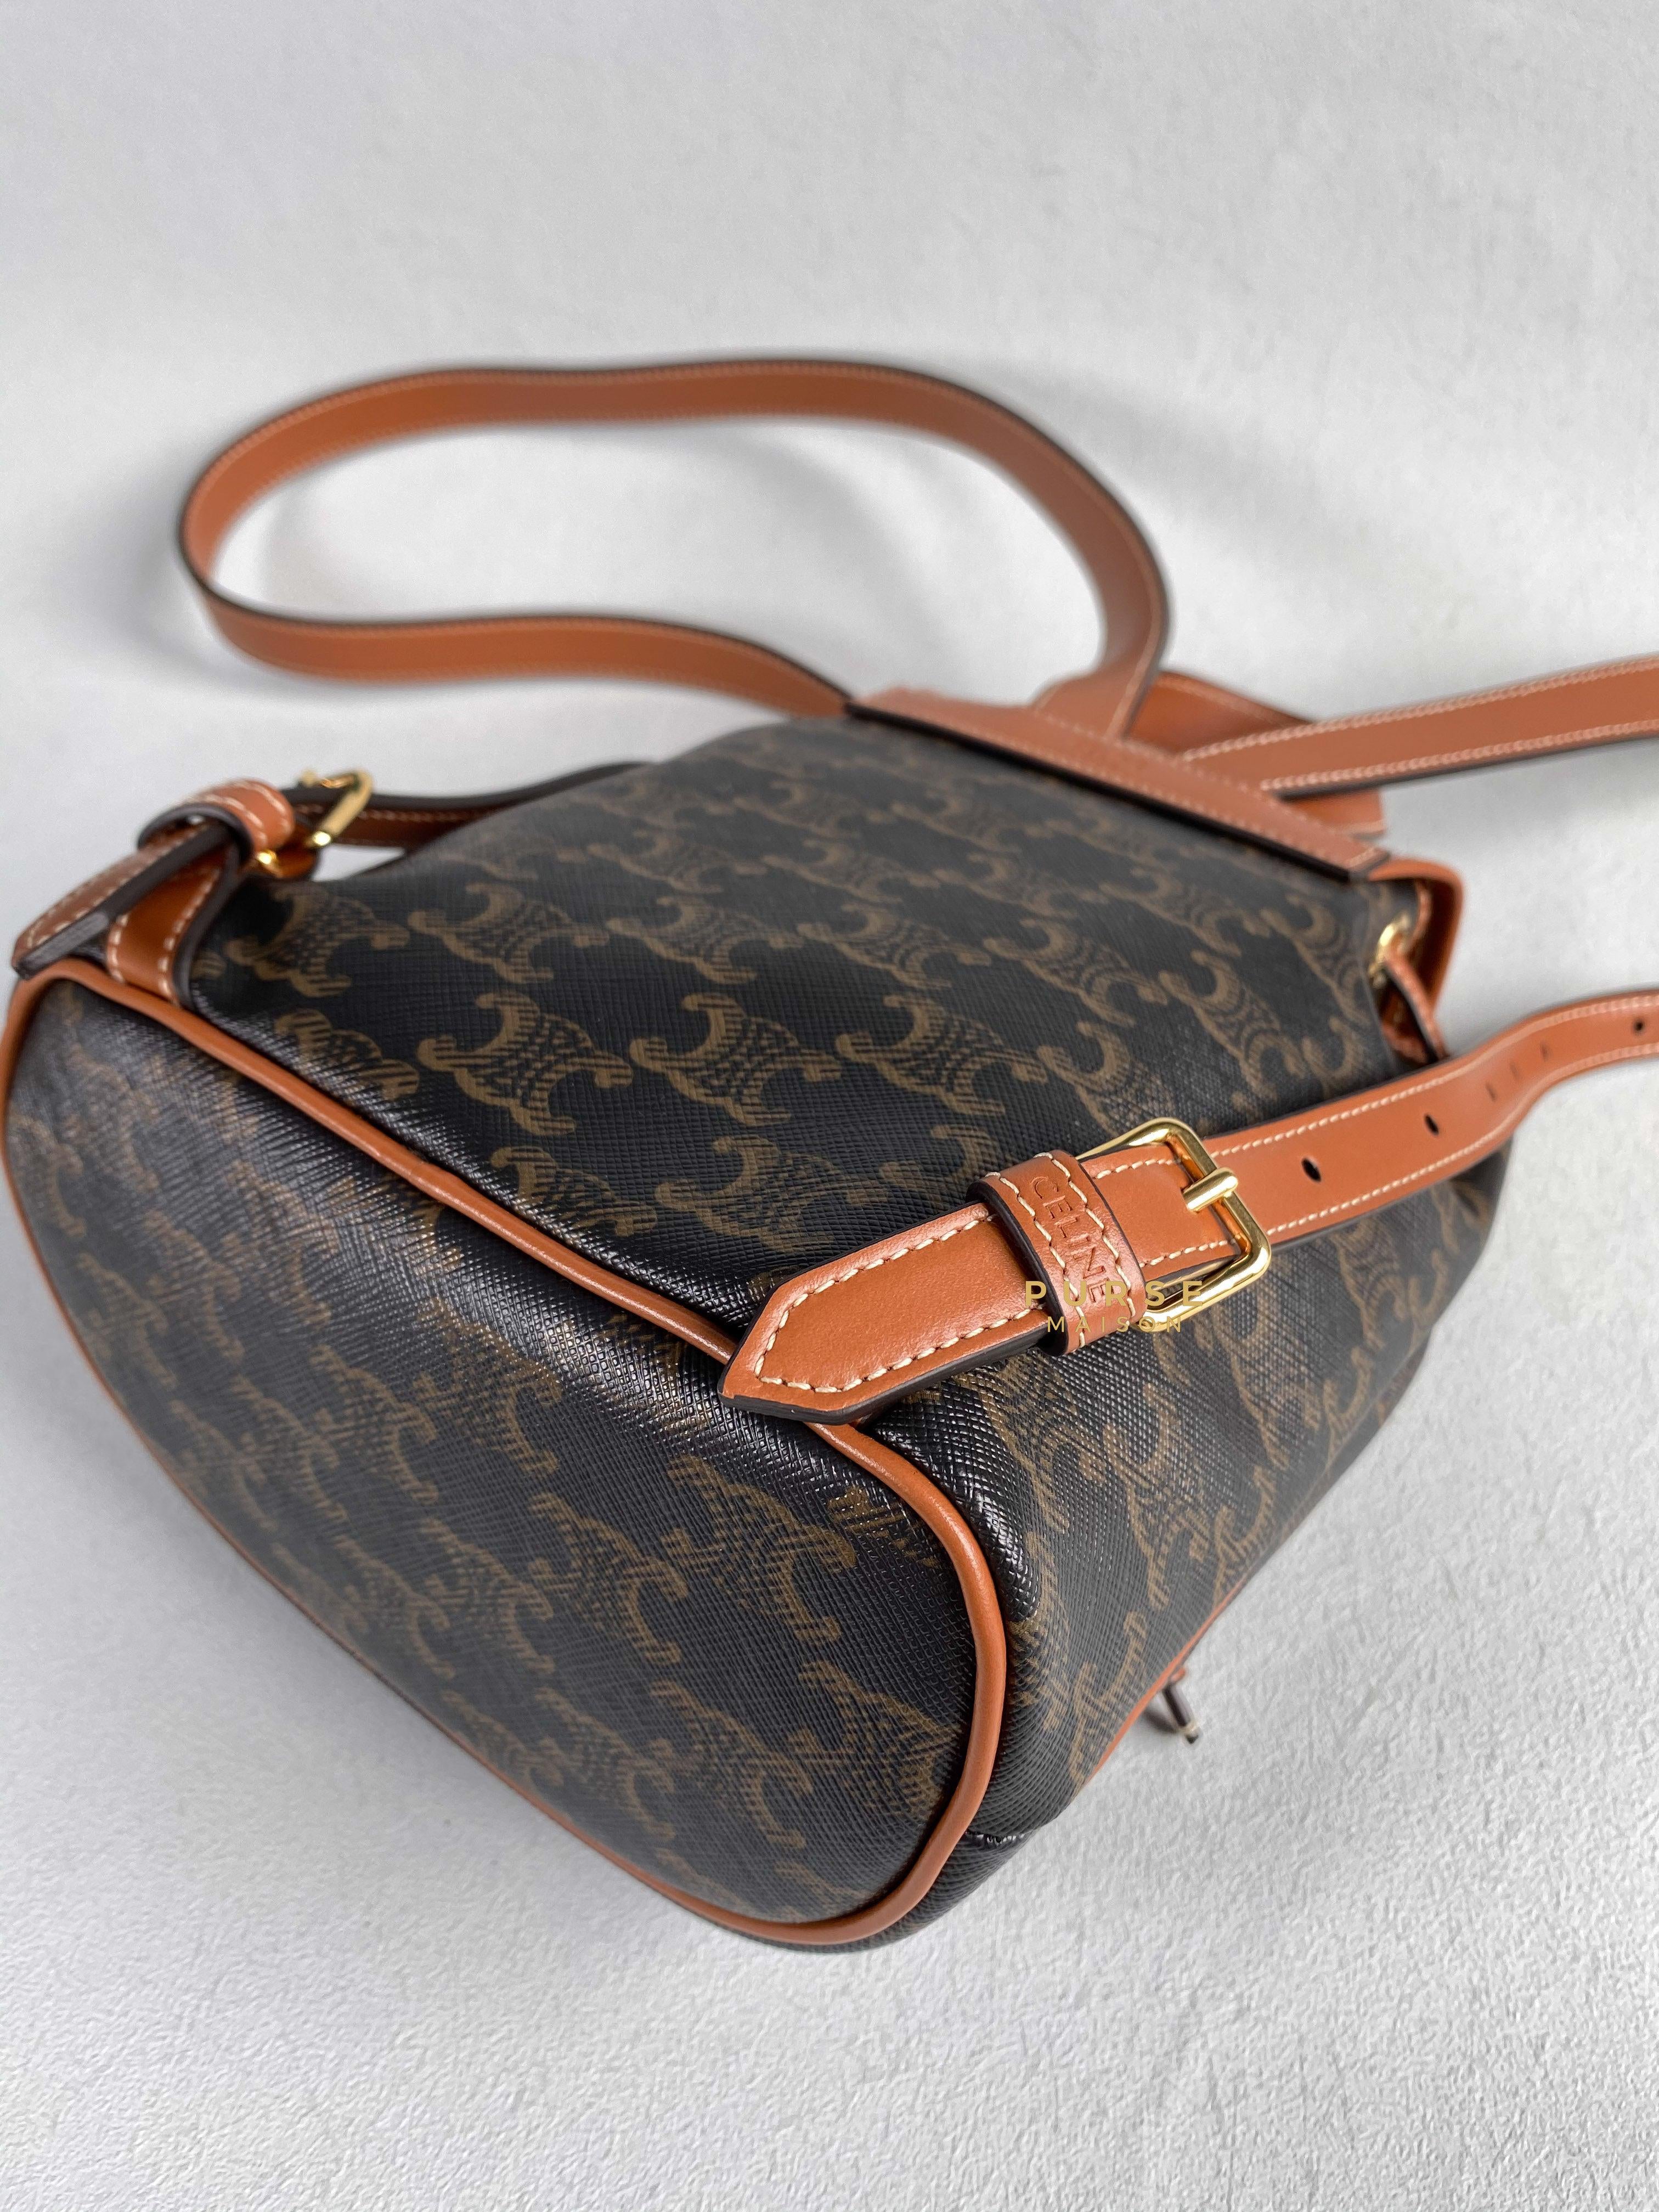 Celine Triomphe Canvas Calfskin Mini Folco Backpack | Purse Maison Luxury Bags Shop